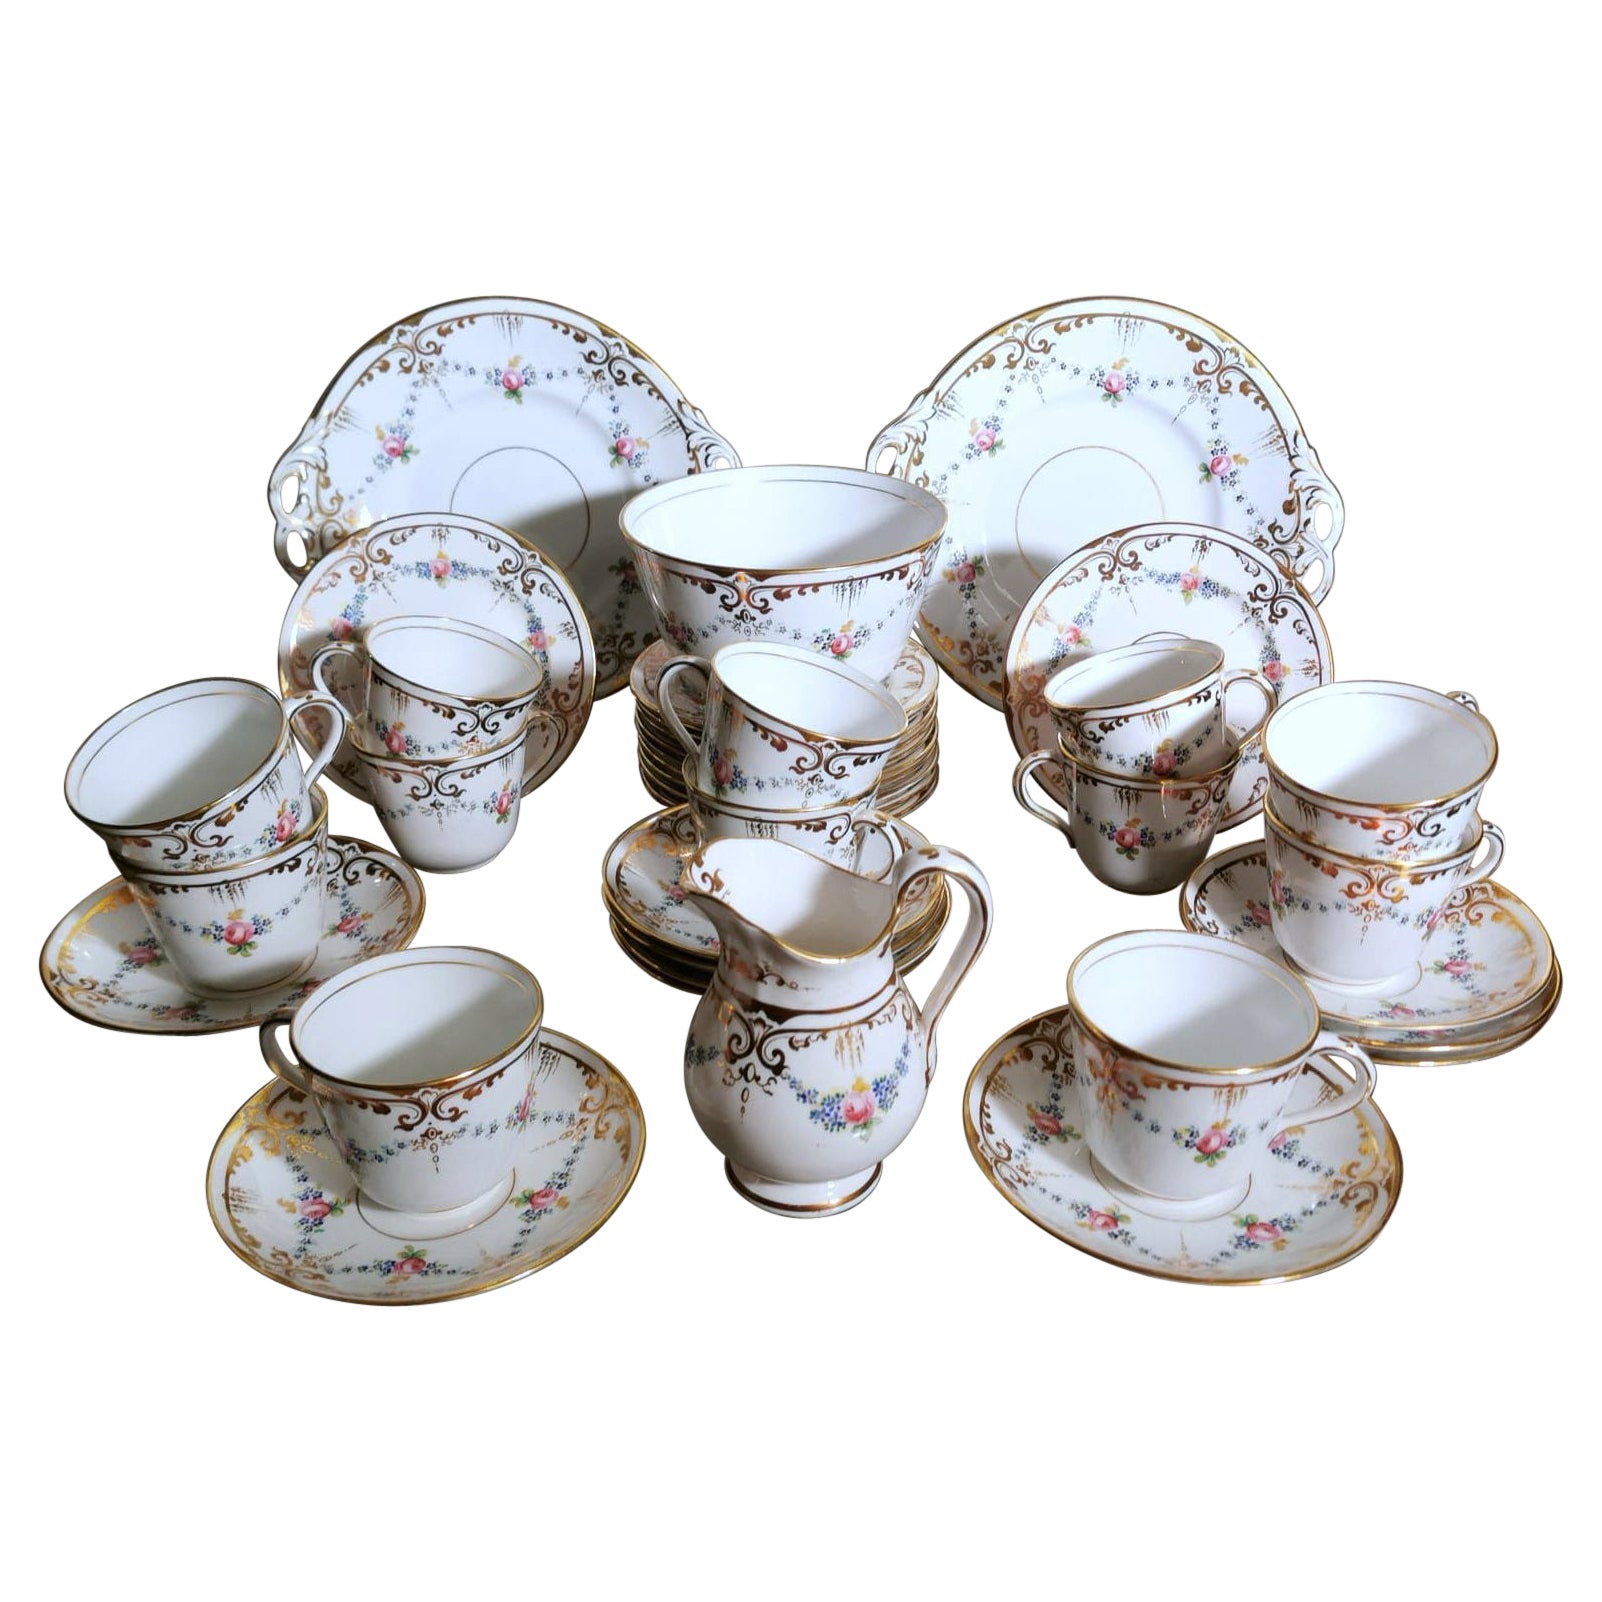 Napoleon III Style Porcelain De Paris Coffee/Tea Service For 12 People-28 Pieces For Sale